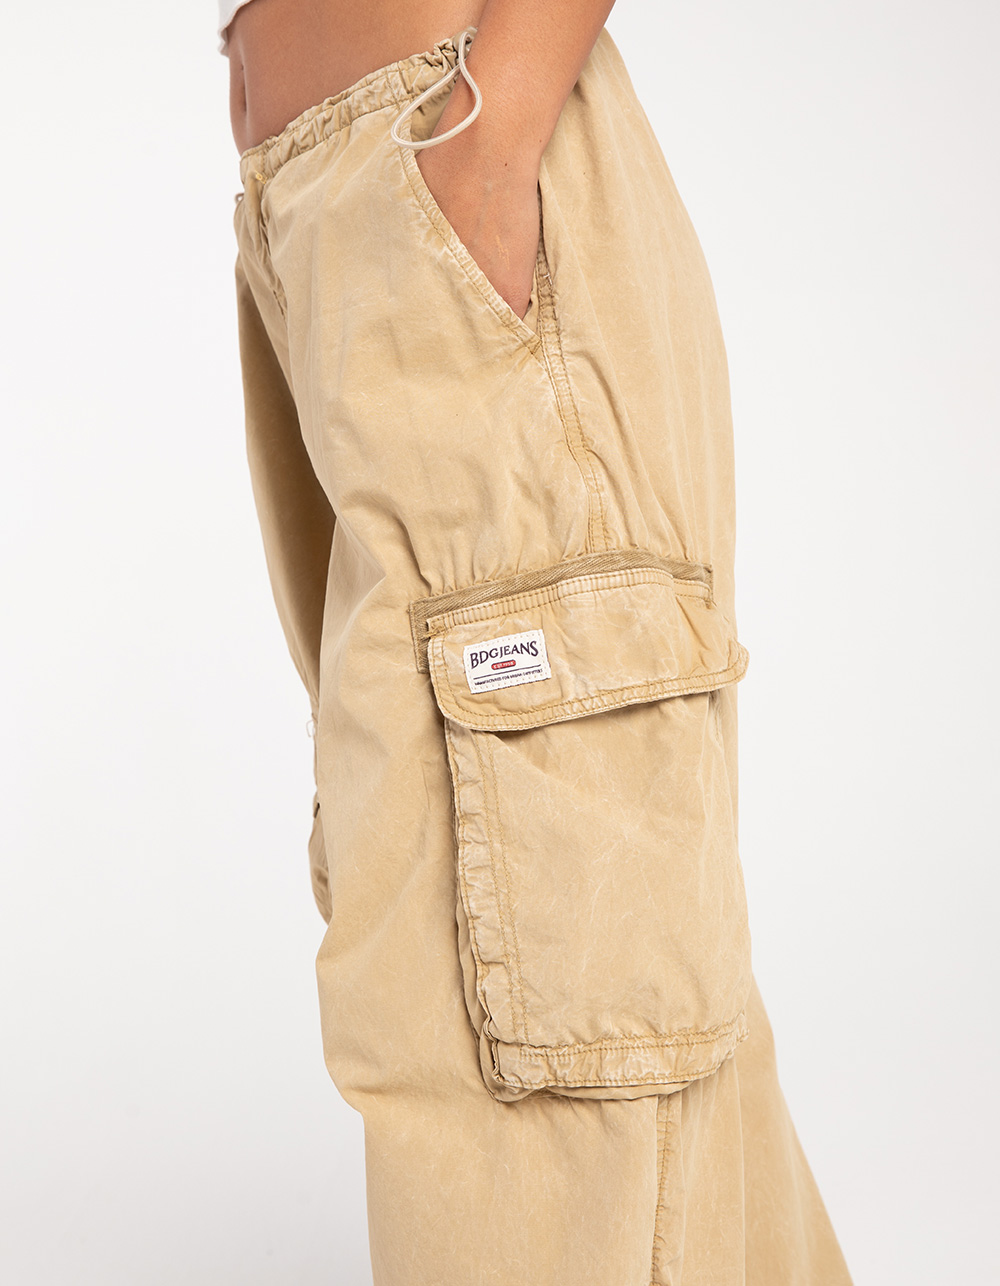 - DK Tech Pocket Tillys Womens Maxi | Urban KHAKI Outfitters Pants BDG